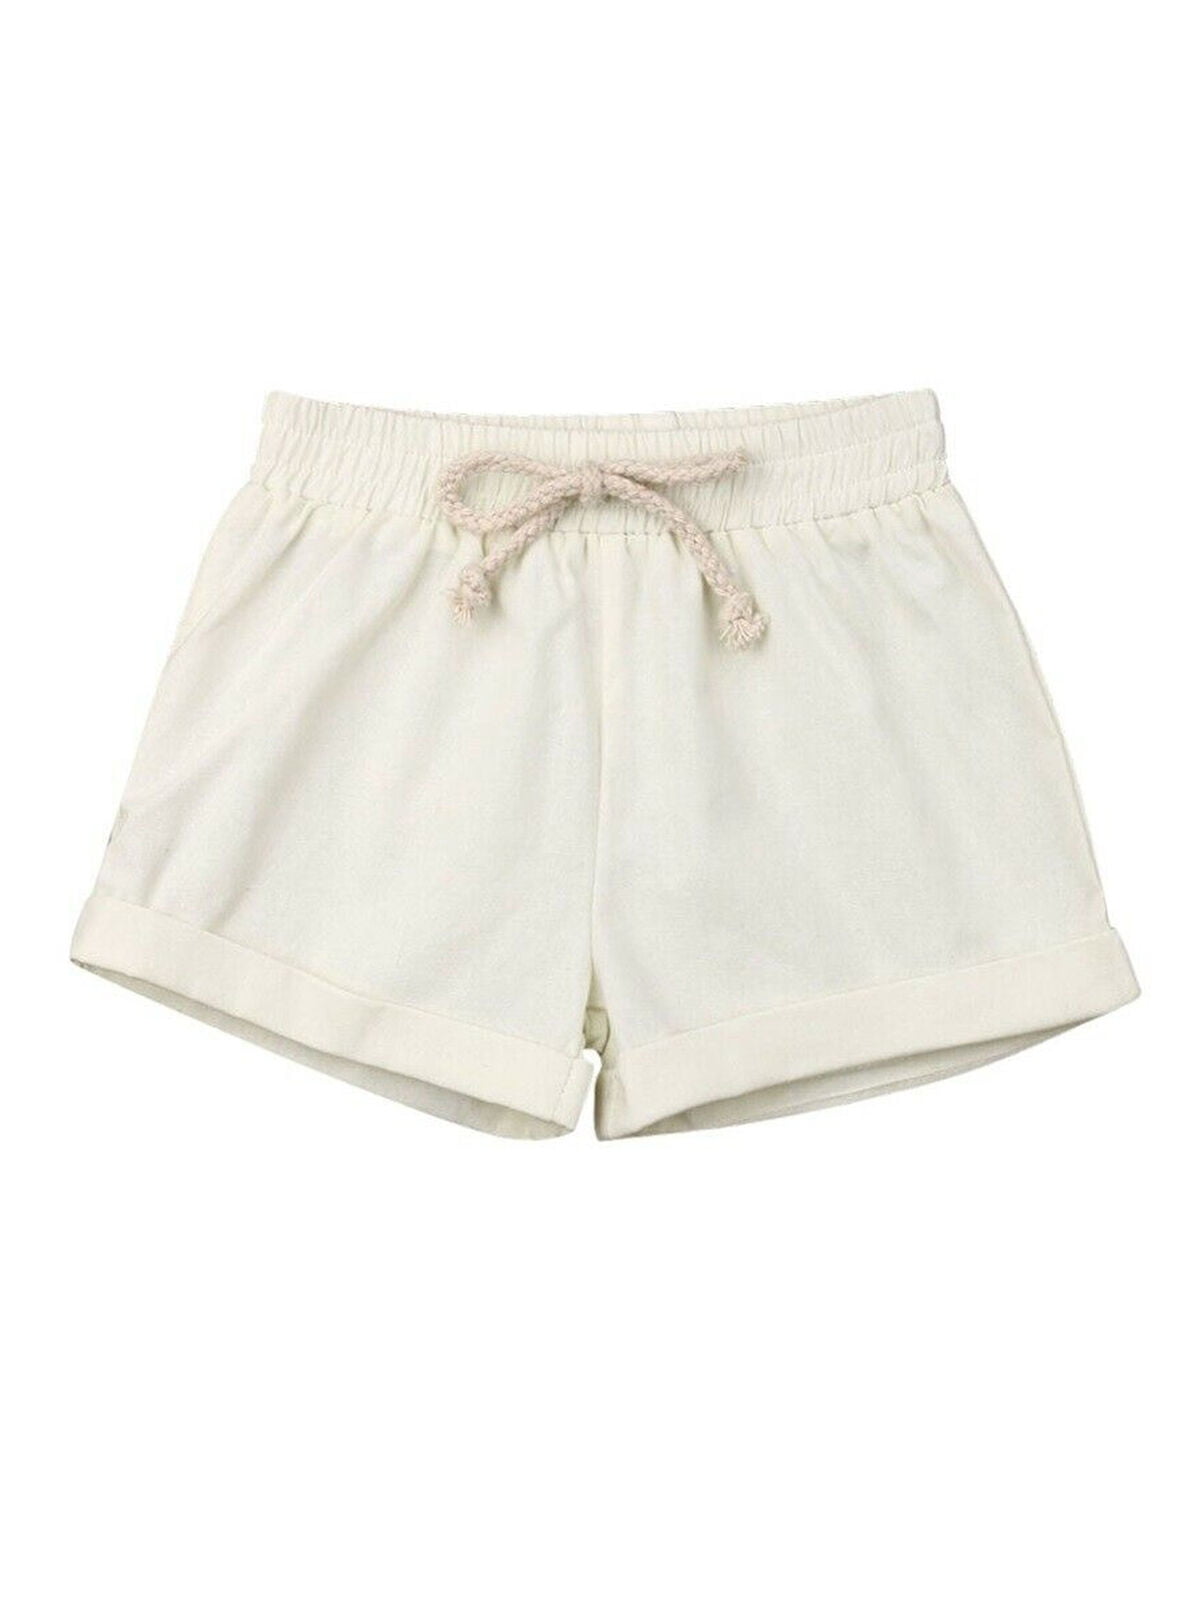 Kids Baby Boy Girl Casual Shorts Pants Toddler Infant Harem Jogger Trouser 3M-4Y 